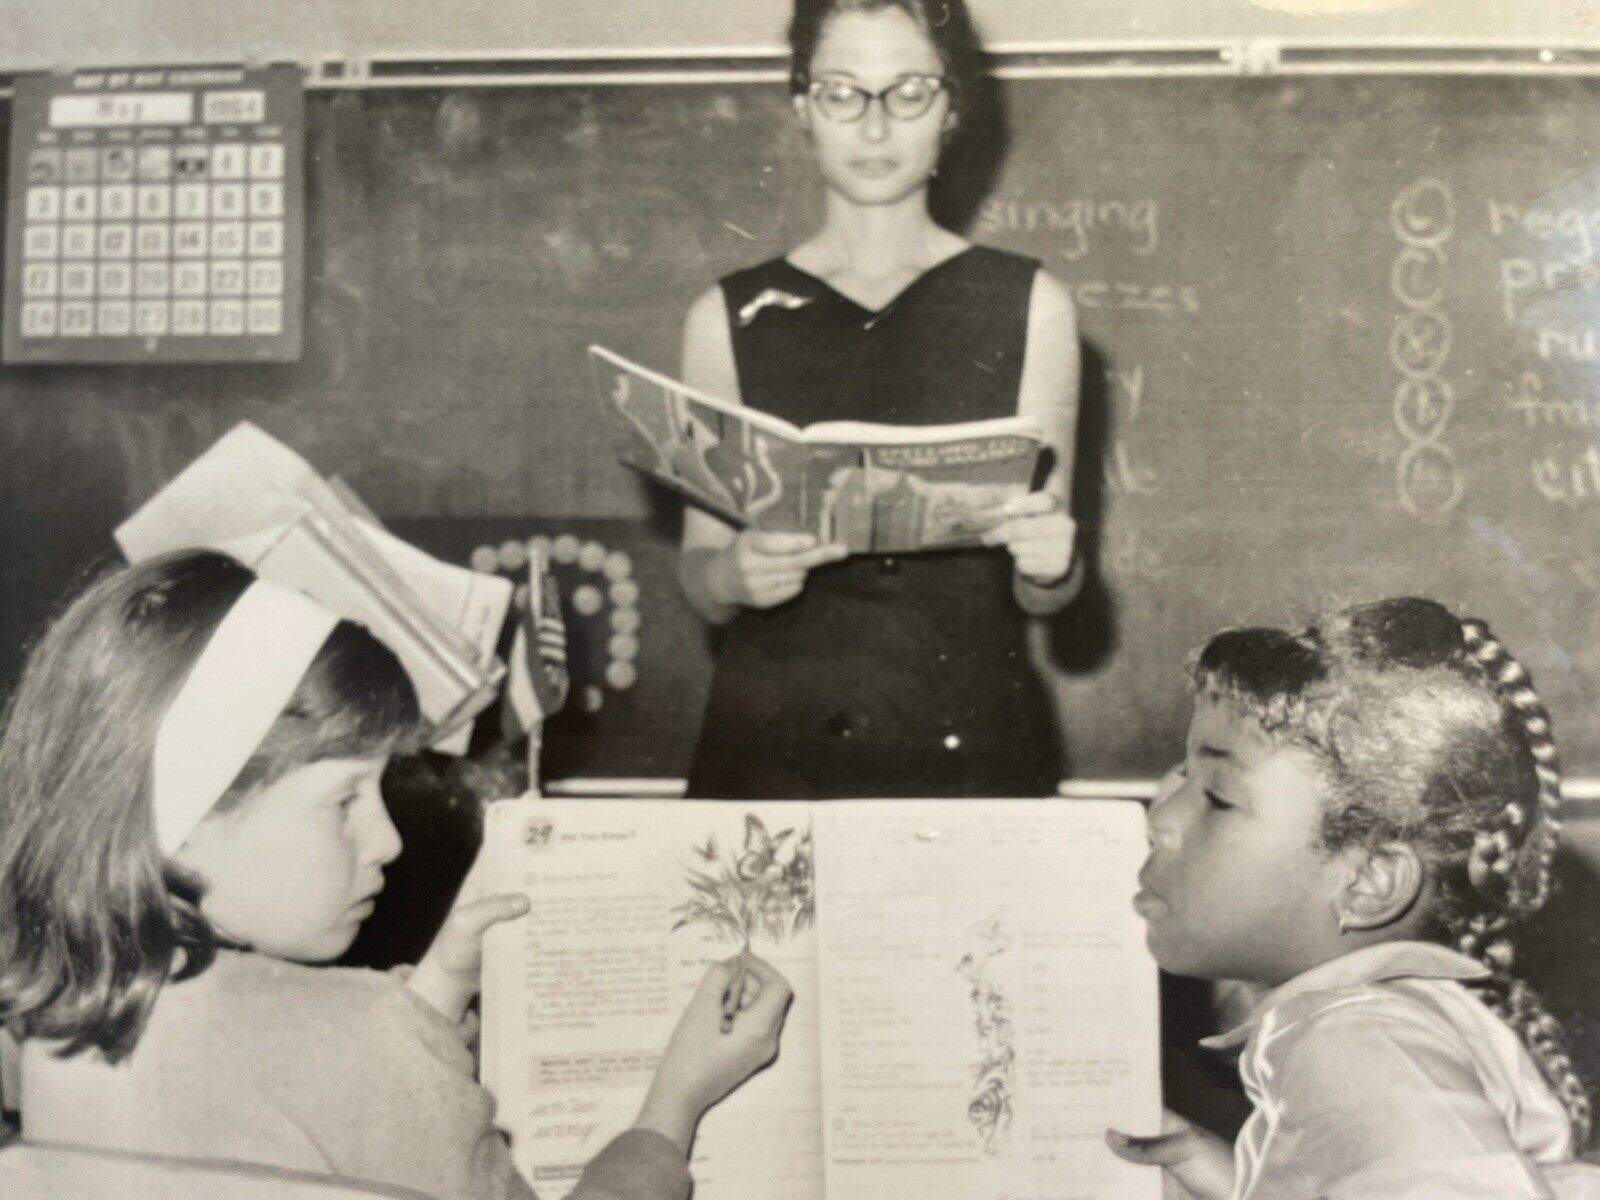 School Segregation Civil Rights Press Photograph 1964 #historyinpieces